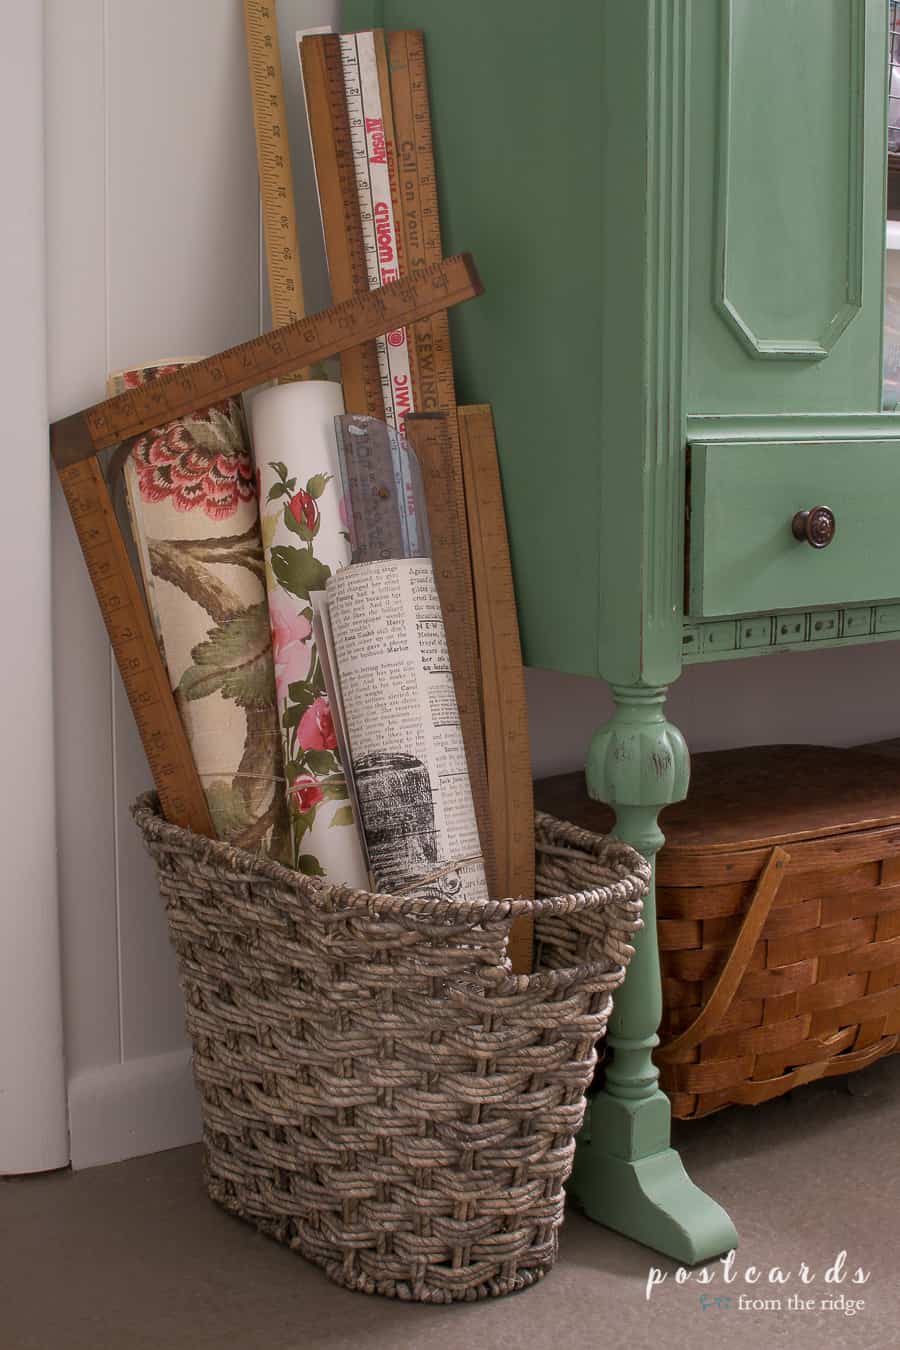 Vintage yardsticks and wallpaper pages in a woven basket